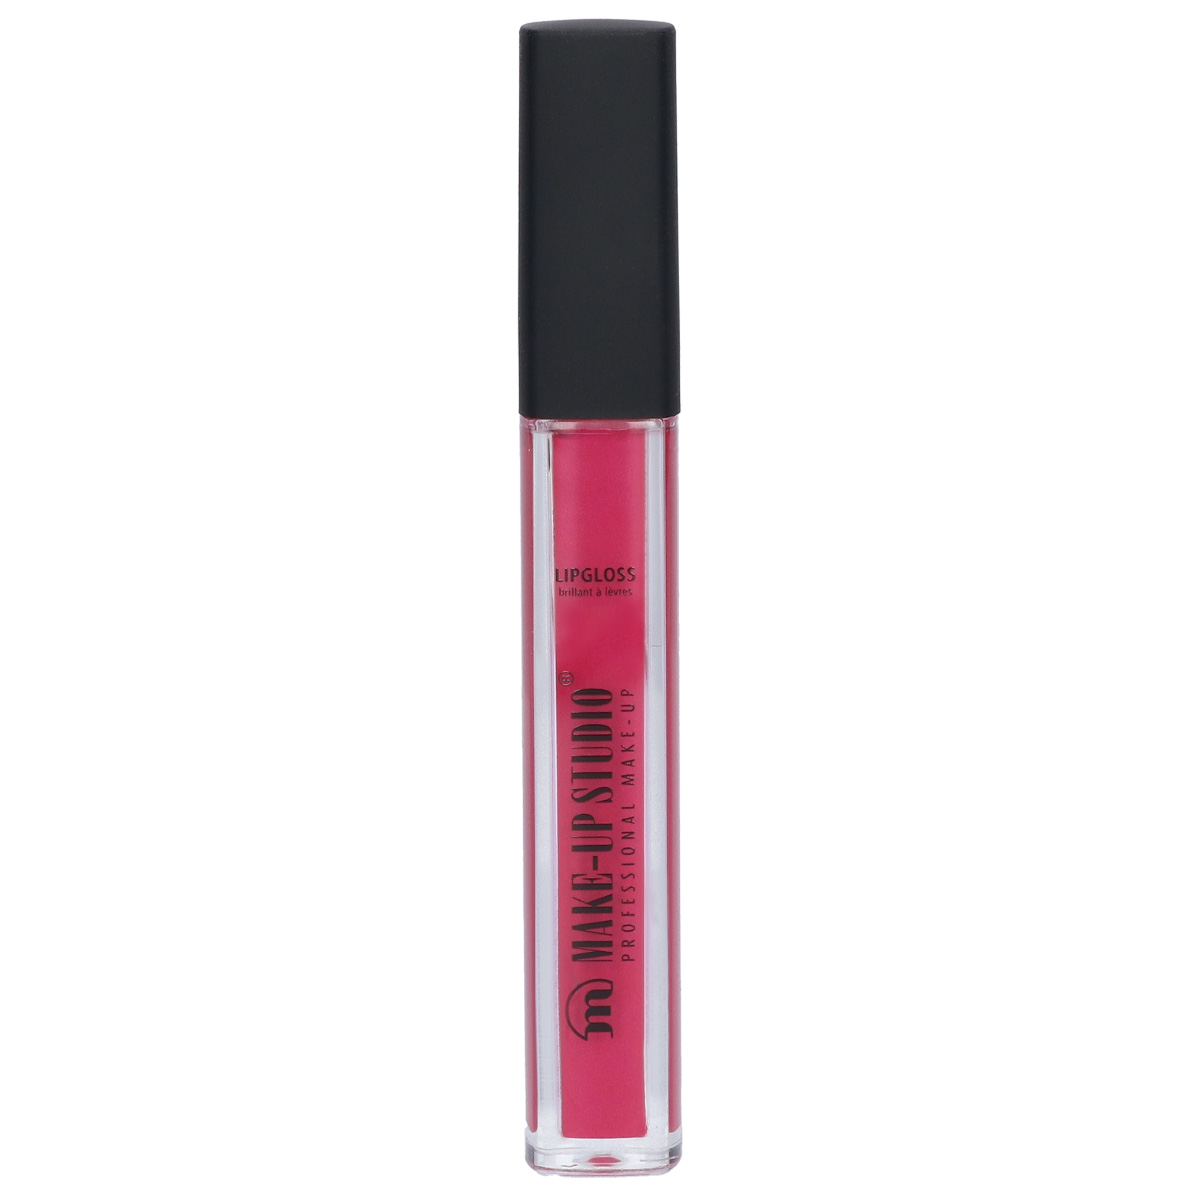 Make-up Studio Lip Gloss Paint - Pink Desire